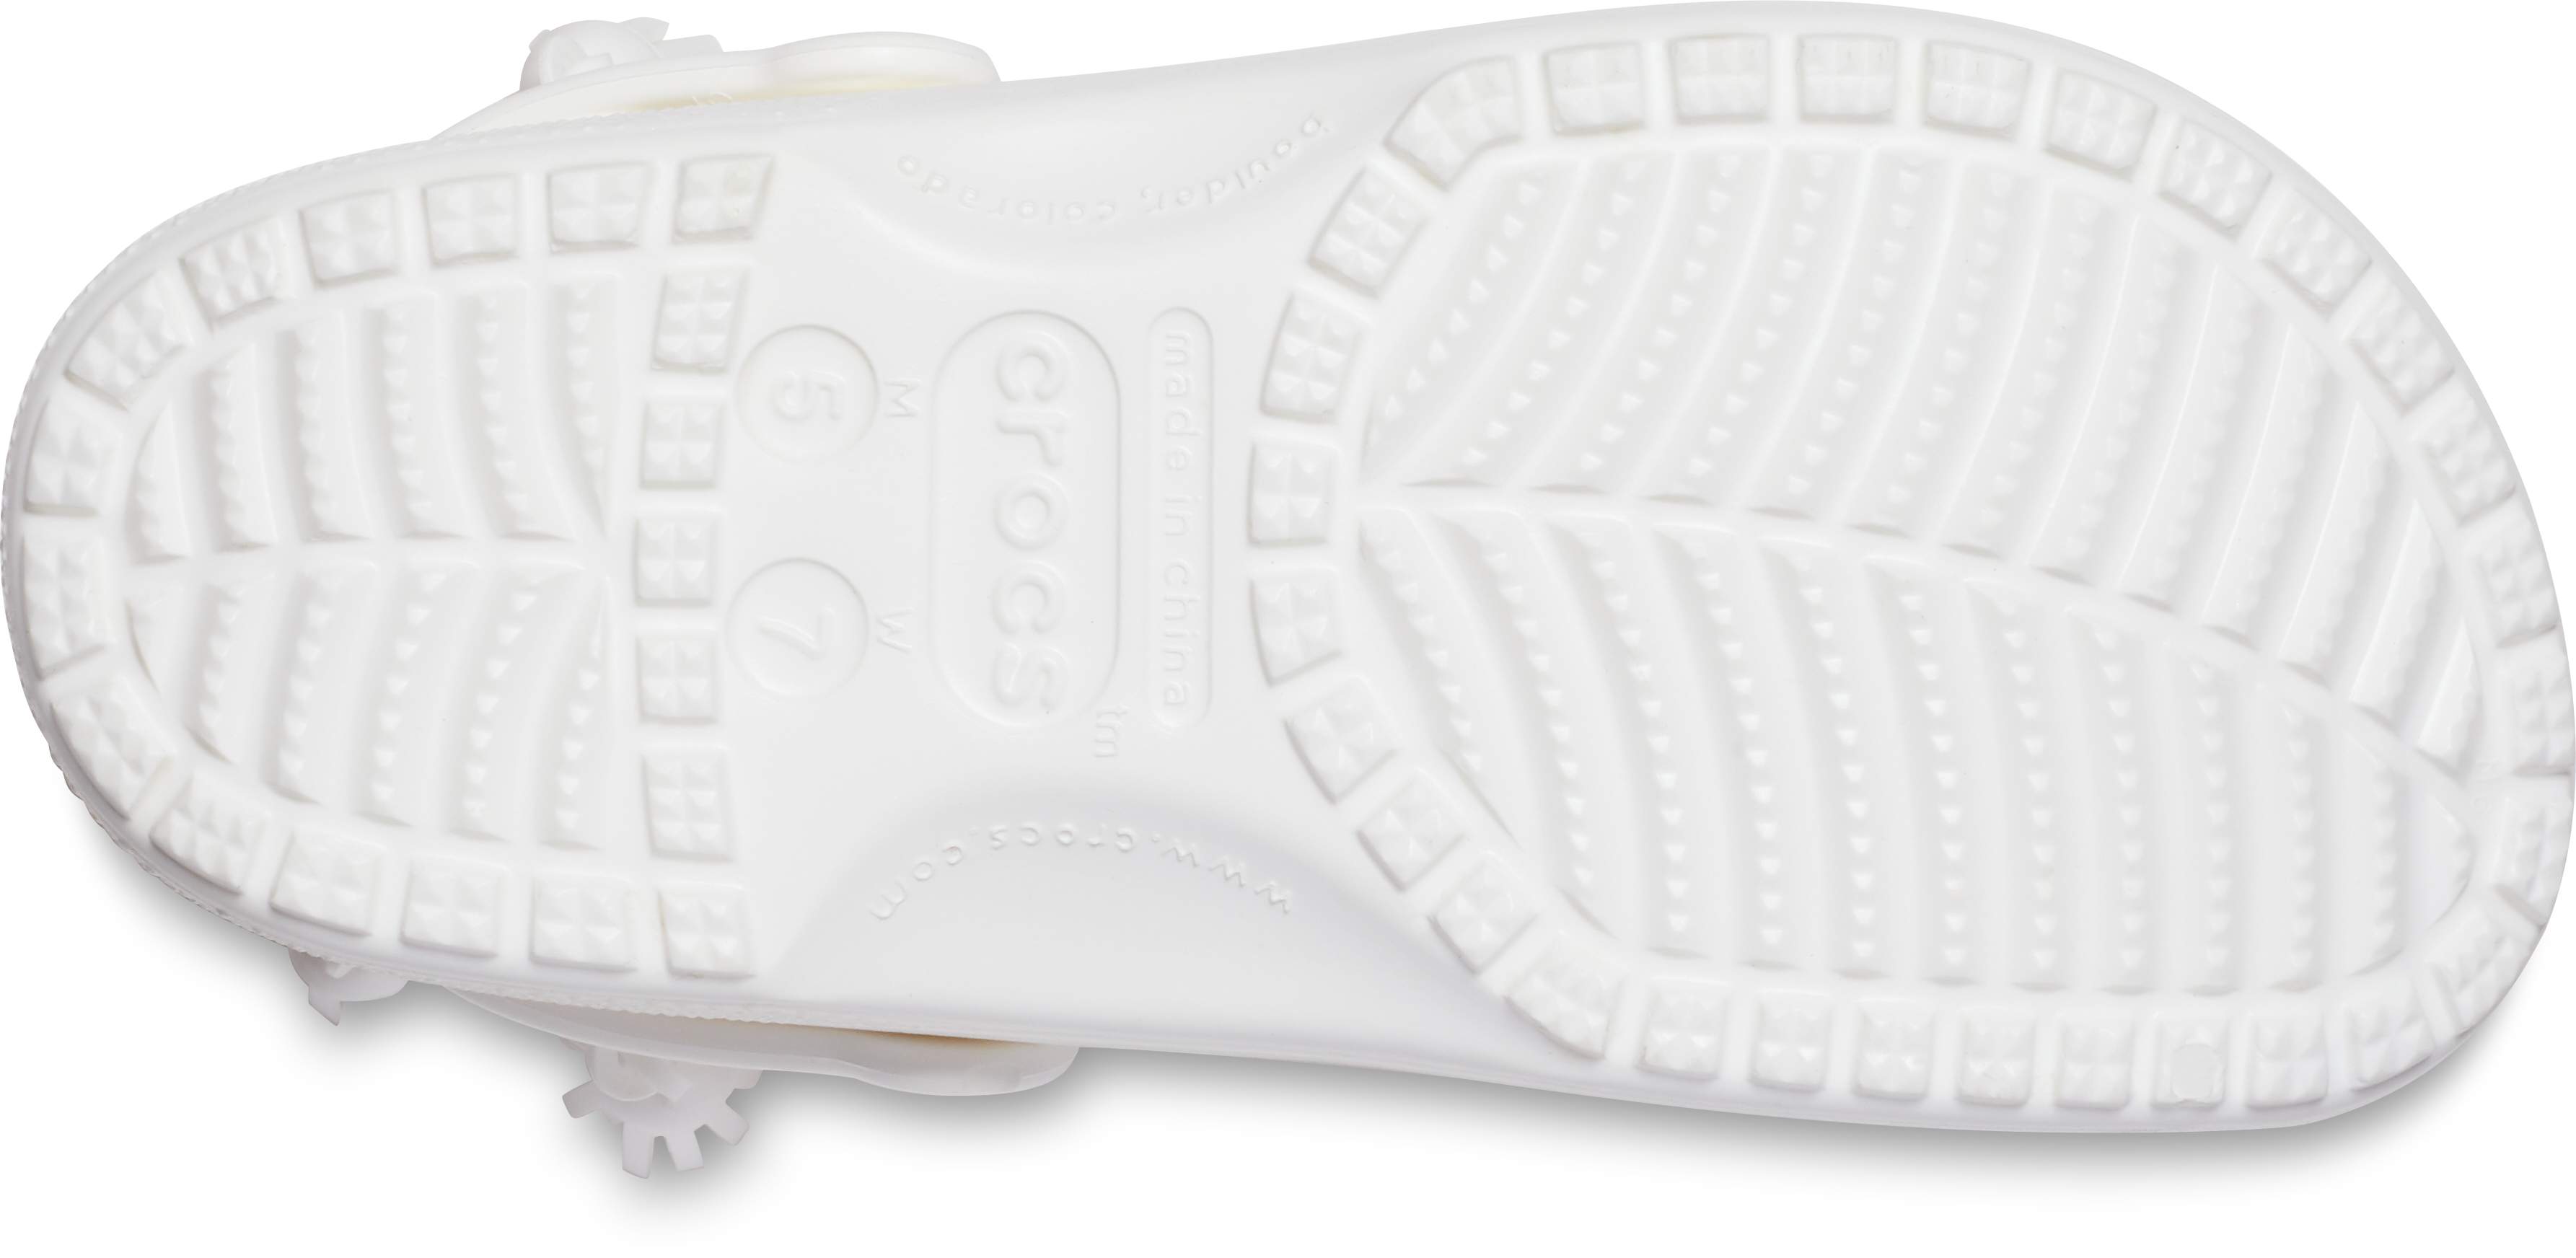 iridescent white crocs